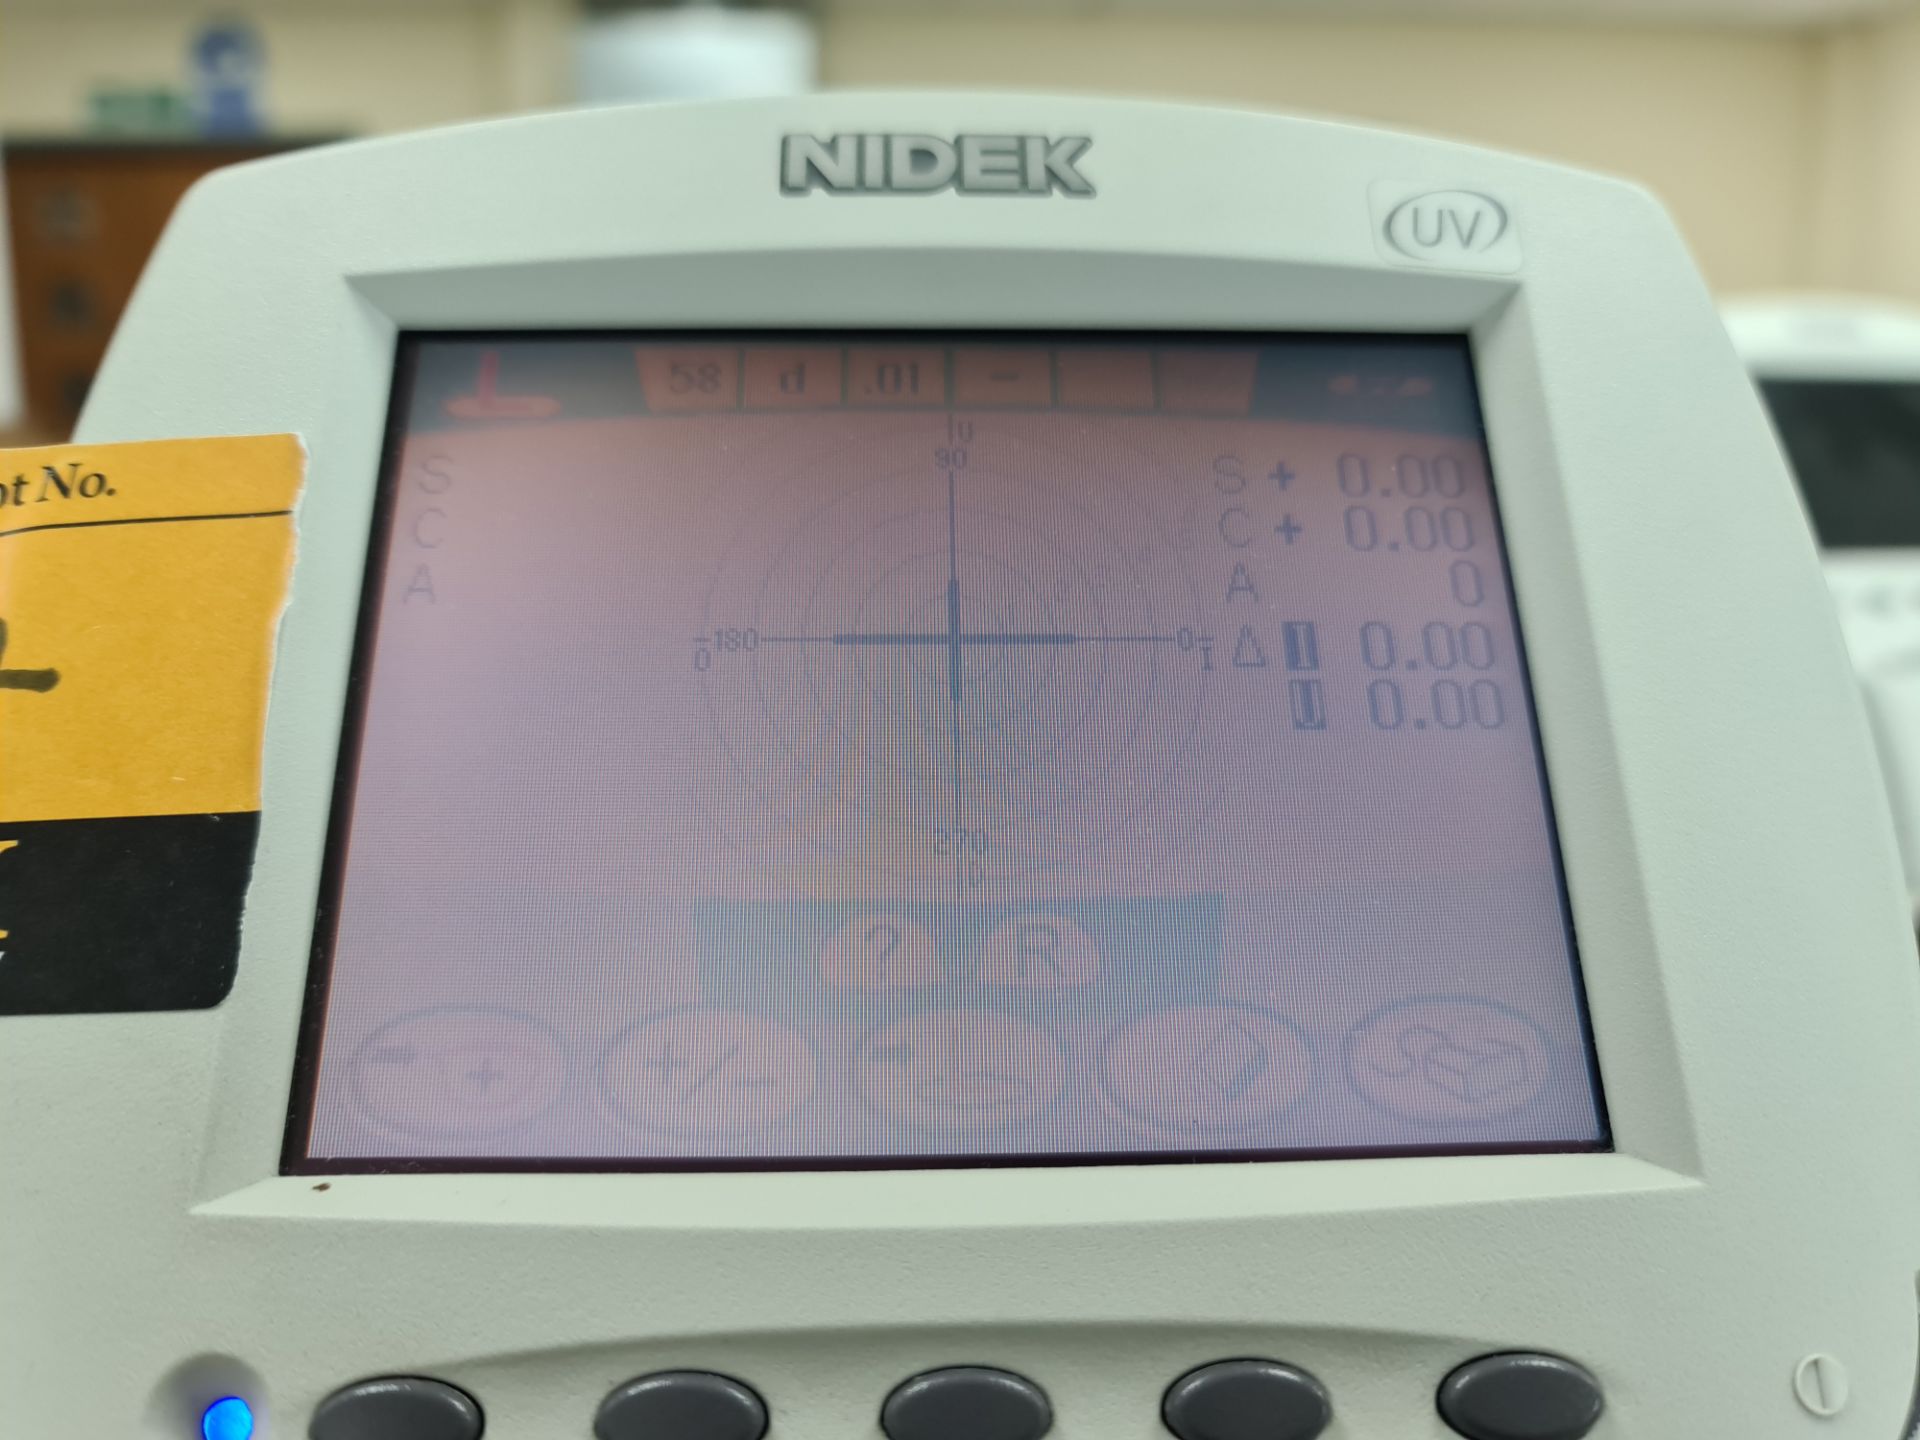 Nidek Auto Lensmeter model LM-600PD - Image 12 of 13